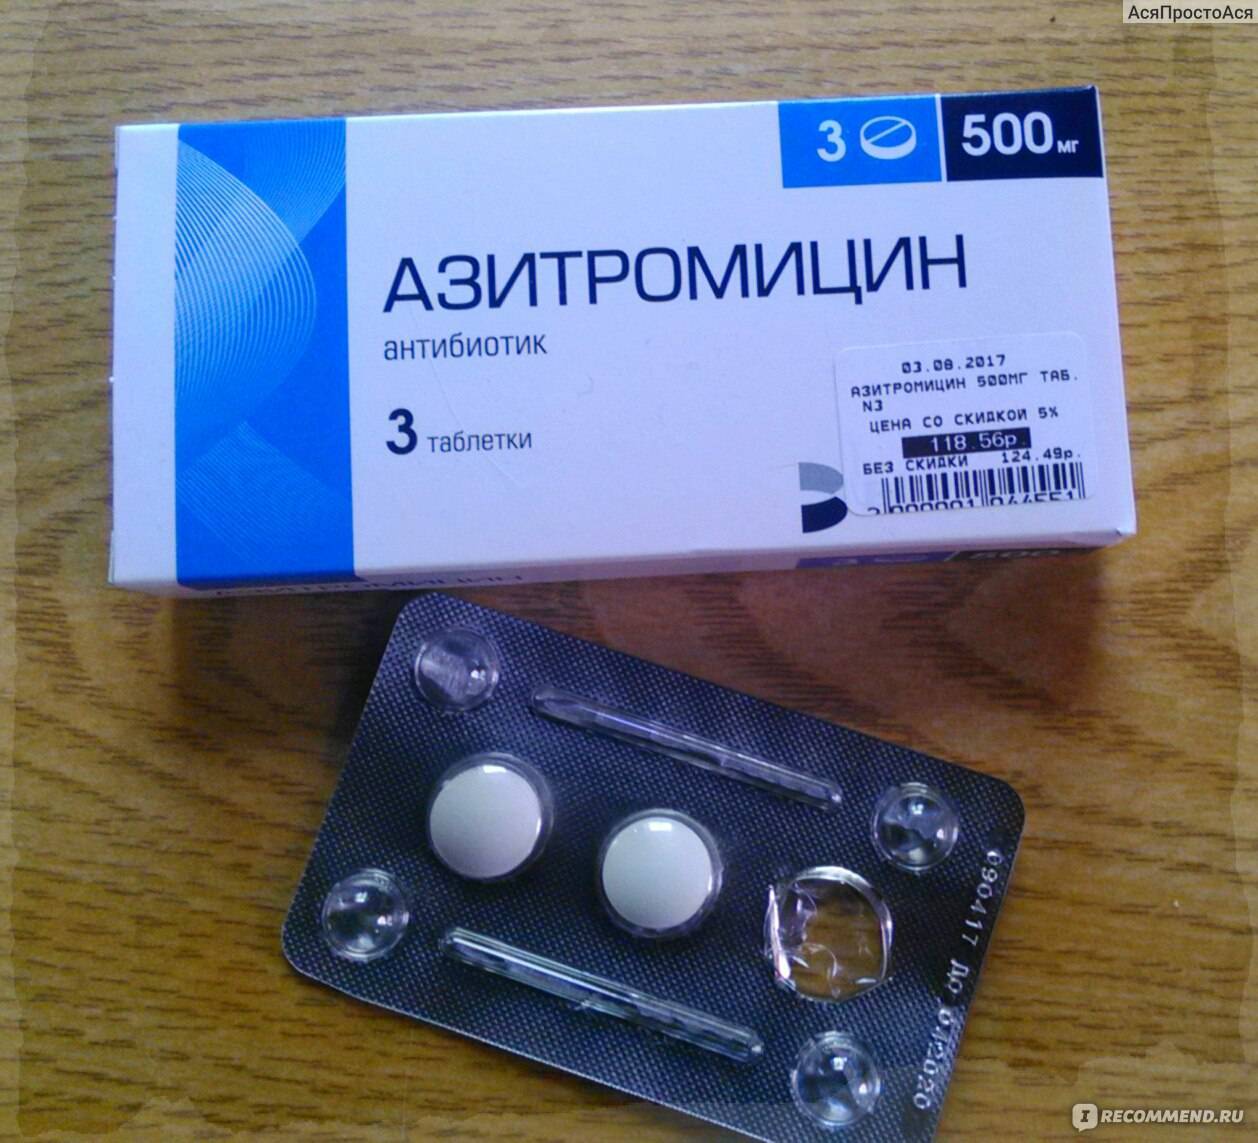 Три антибиотика. Антибиотик три таблетки Азитромицин. Таблетки 3 шт антибиотики Азитромицин. Три таблетки от простуды антибиотик Азитромицин. Антибиотик azithromycin 500.